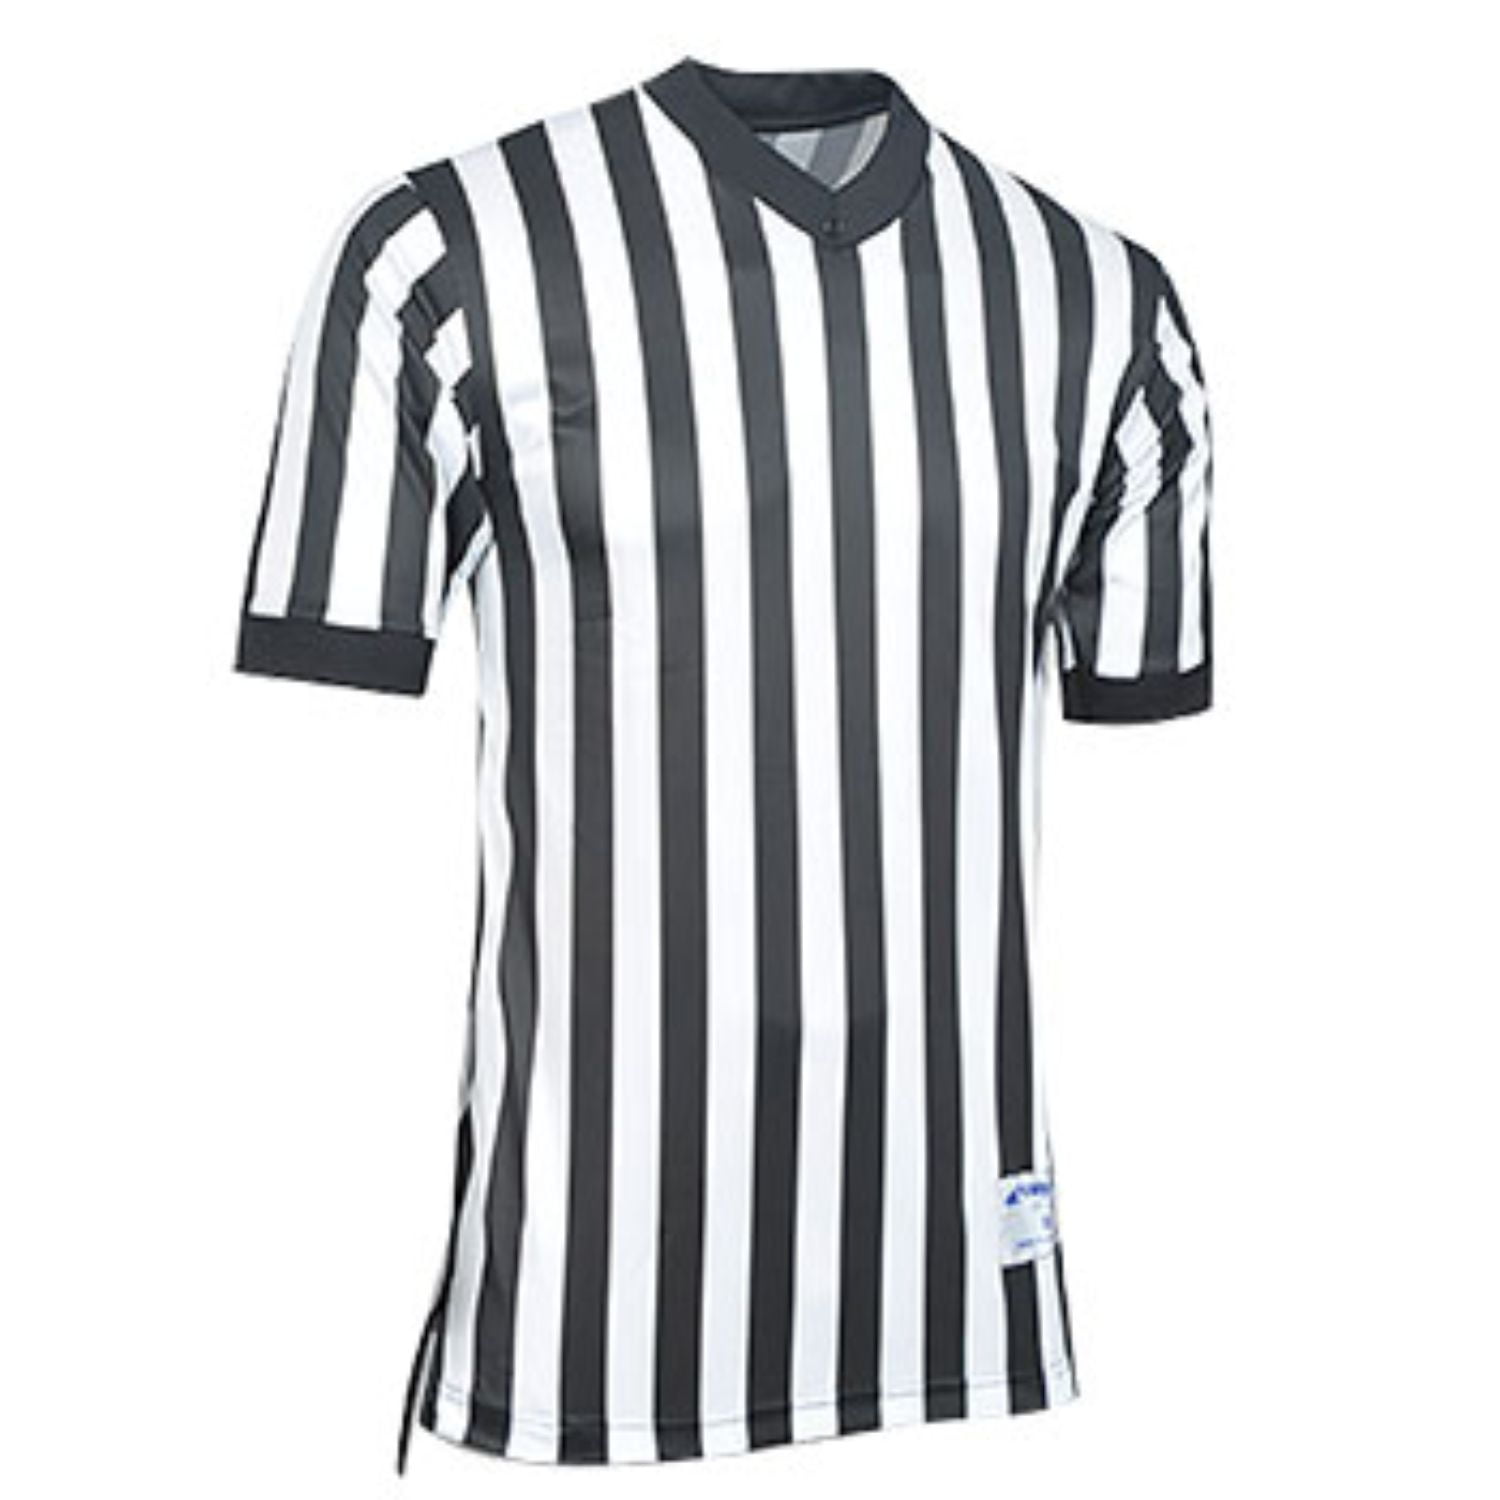 TOPTIE Sportwear Men's Pro-Style Referee Shirt with Quarter Zipper for Basketball Football Soccer 